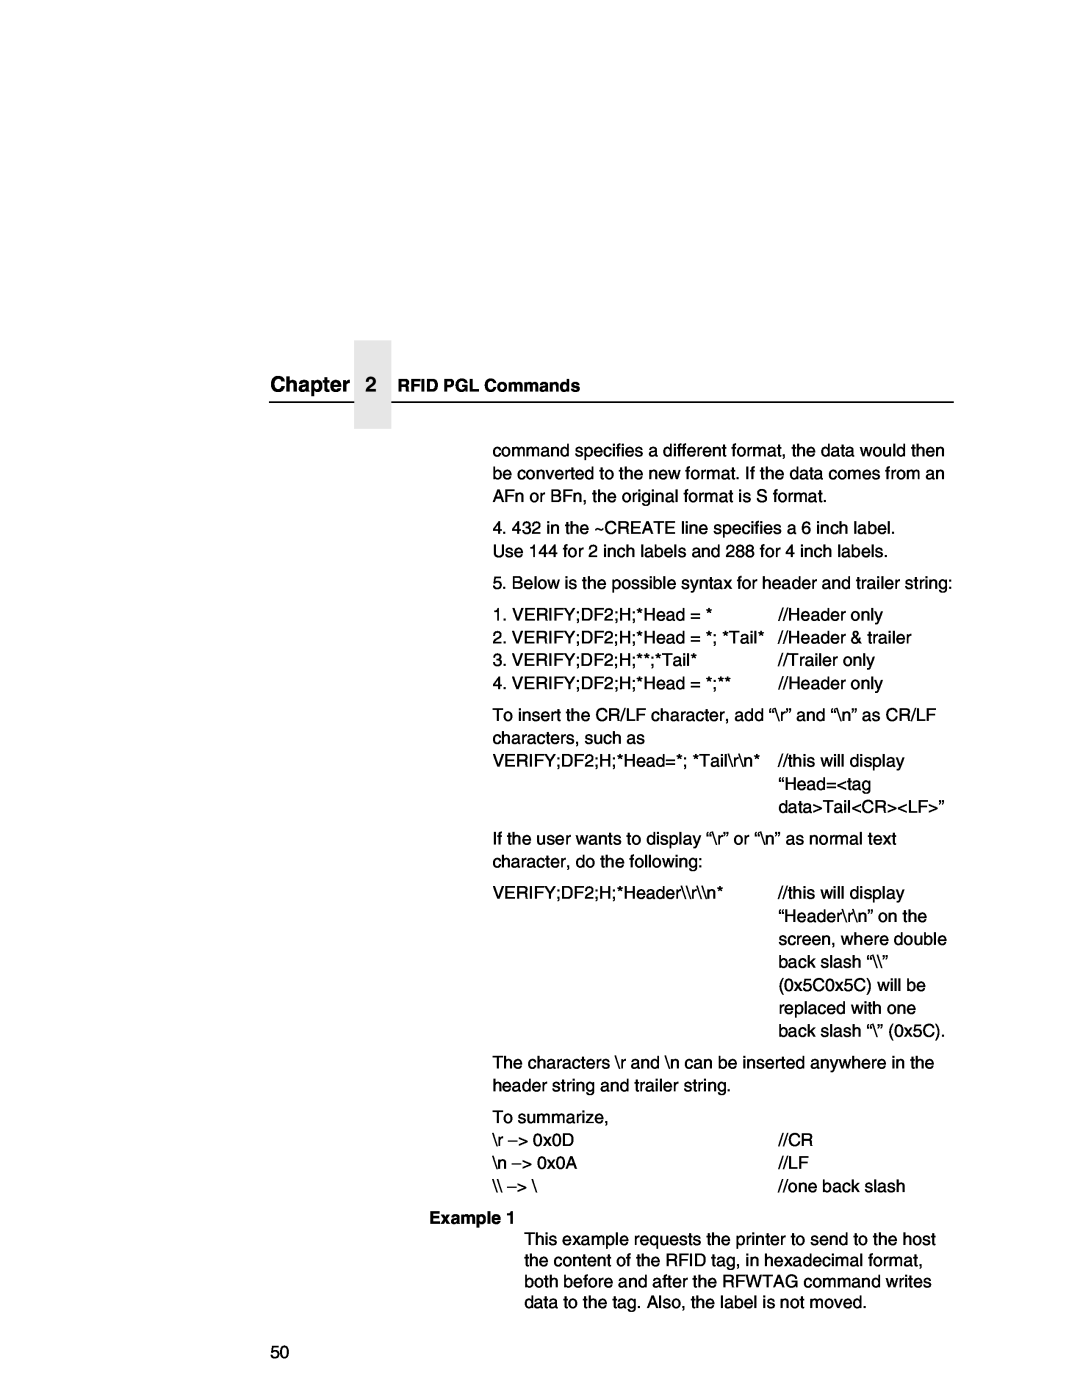 Printronix SL5000r MP manual RFID PGL Commands, Example 